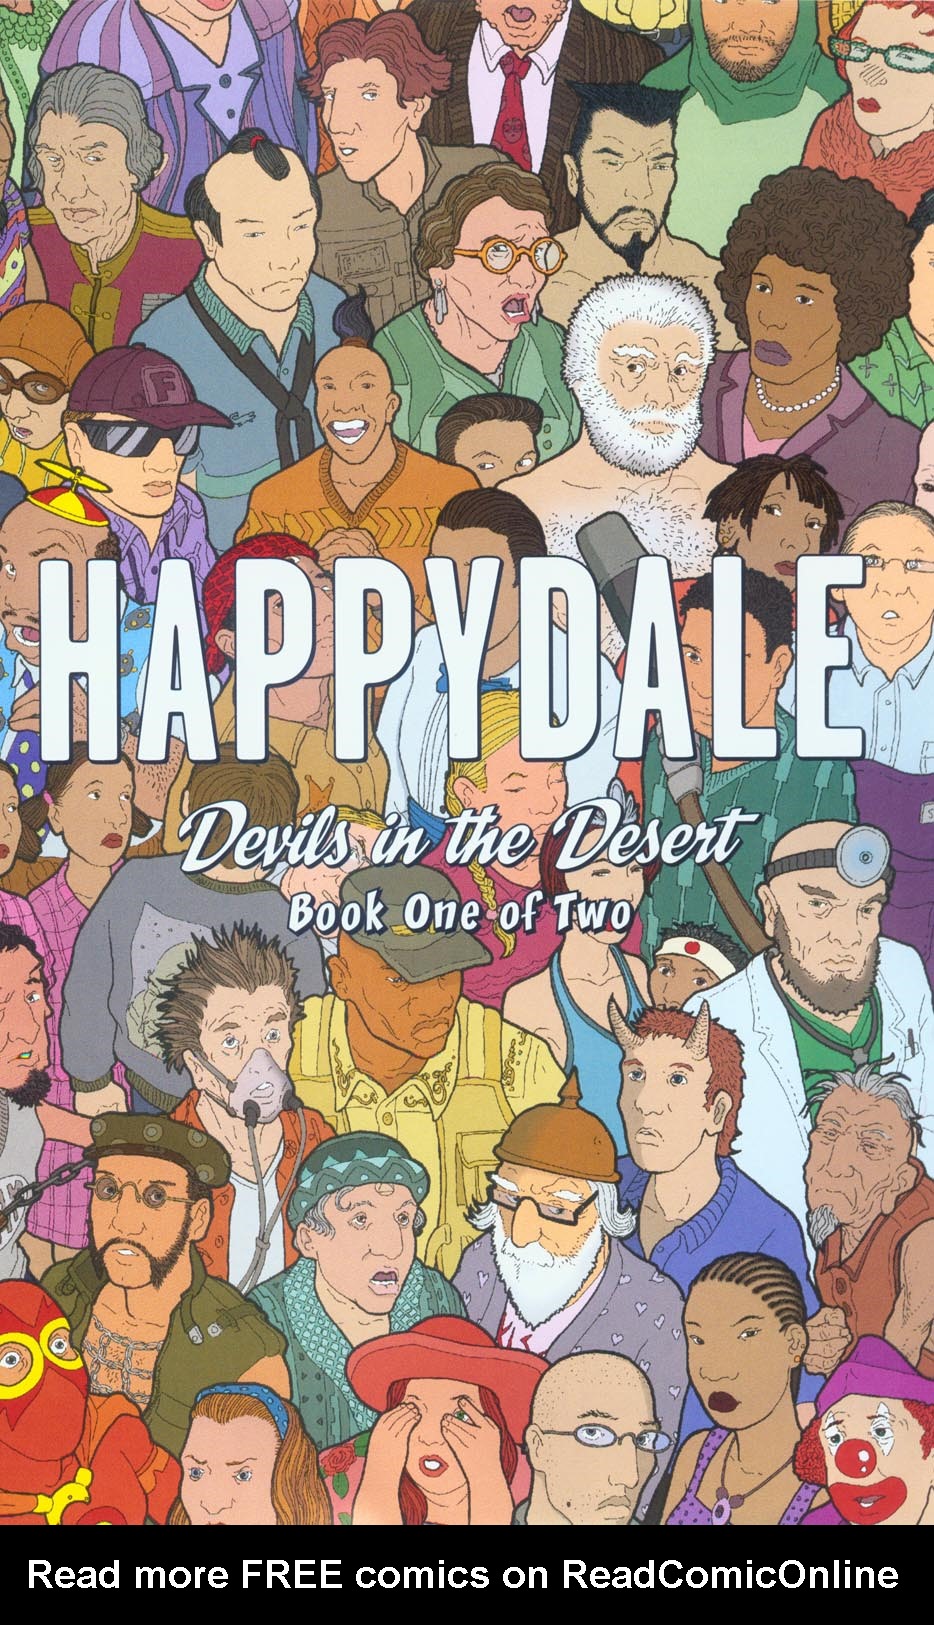 Read online Happydale: Devils in the Desert comic -  Issue #1 - 3